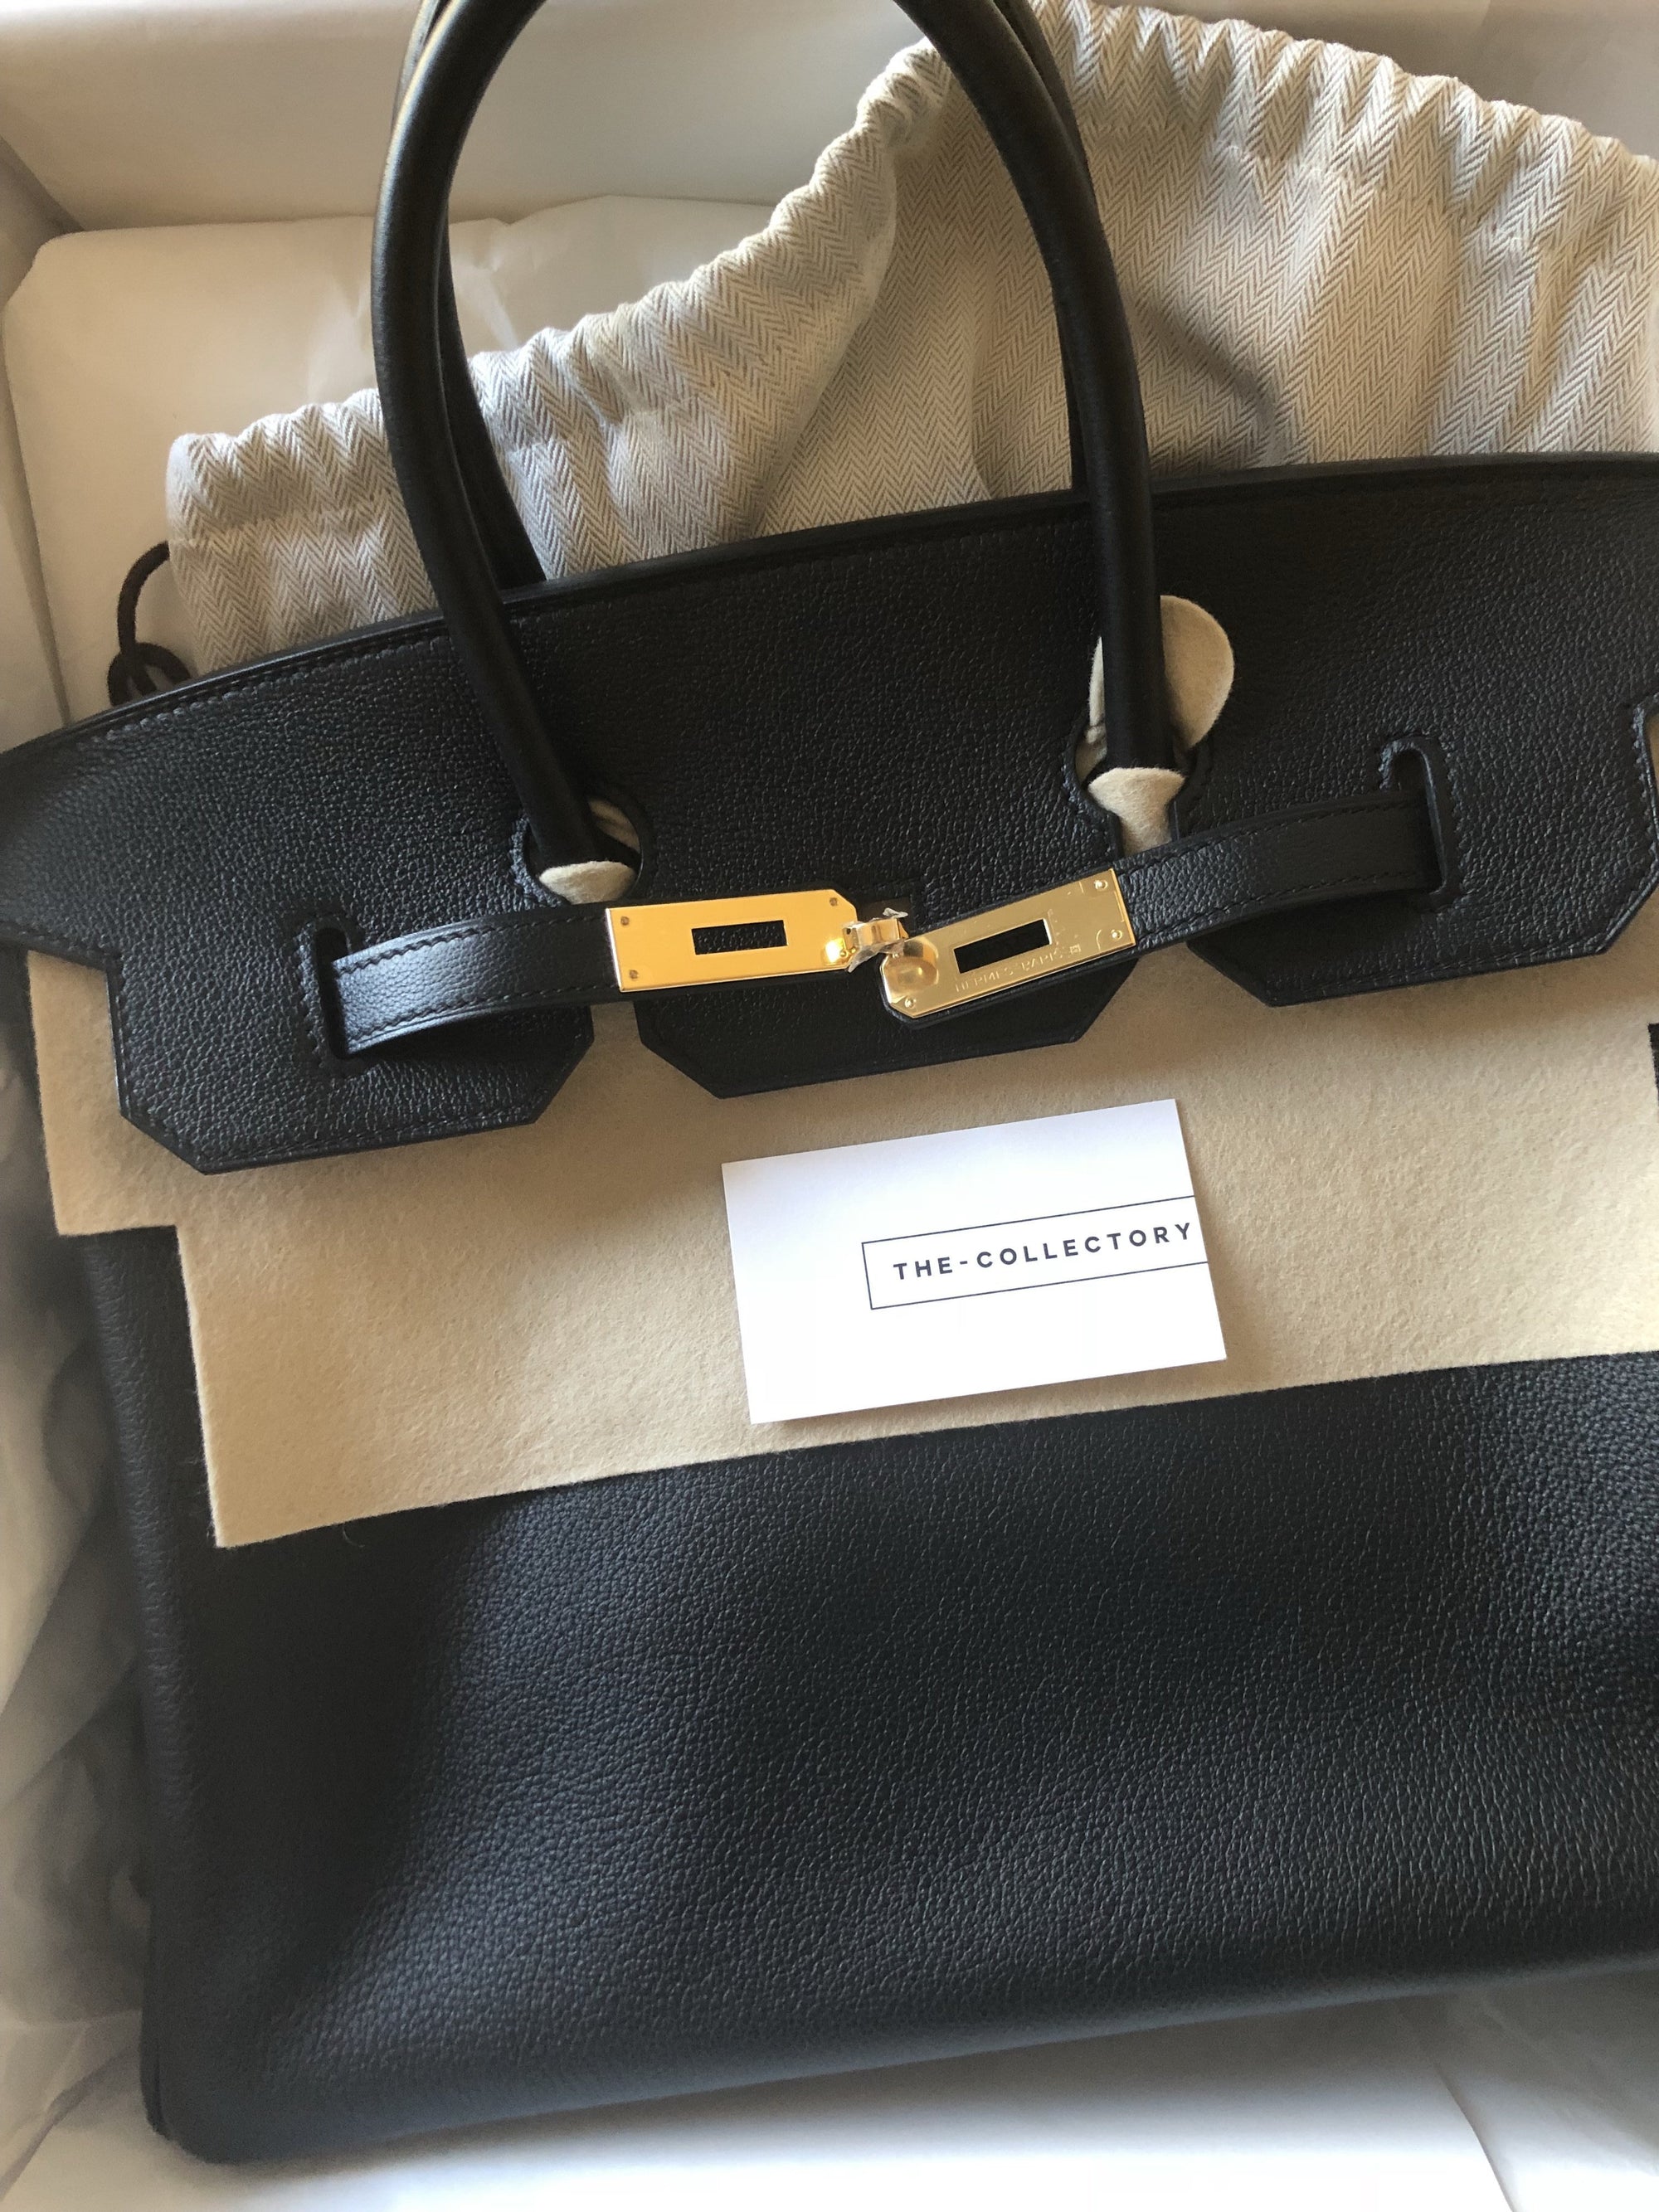 Hermes Birkin 25 Togo Black Gold Hardware - Fashion Handbag